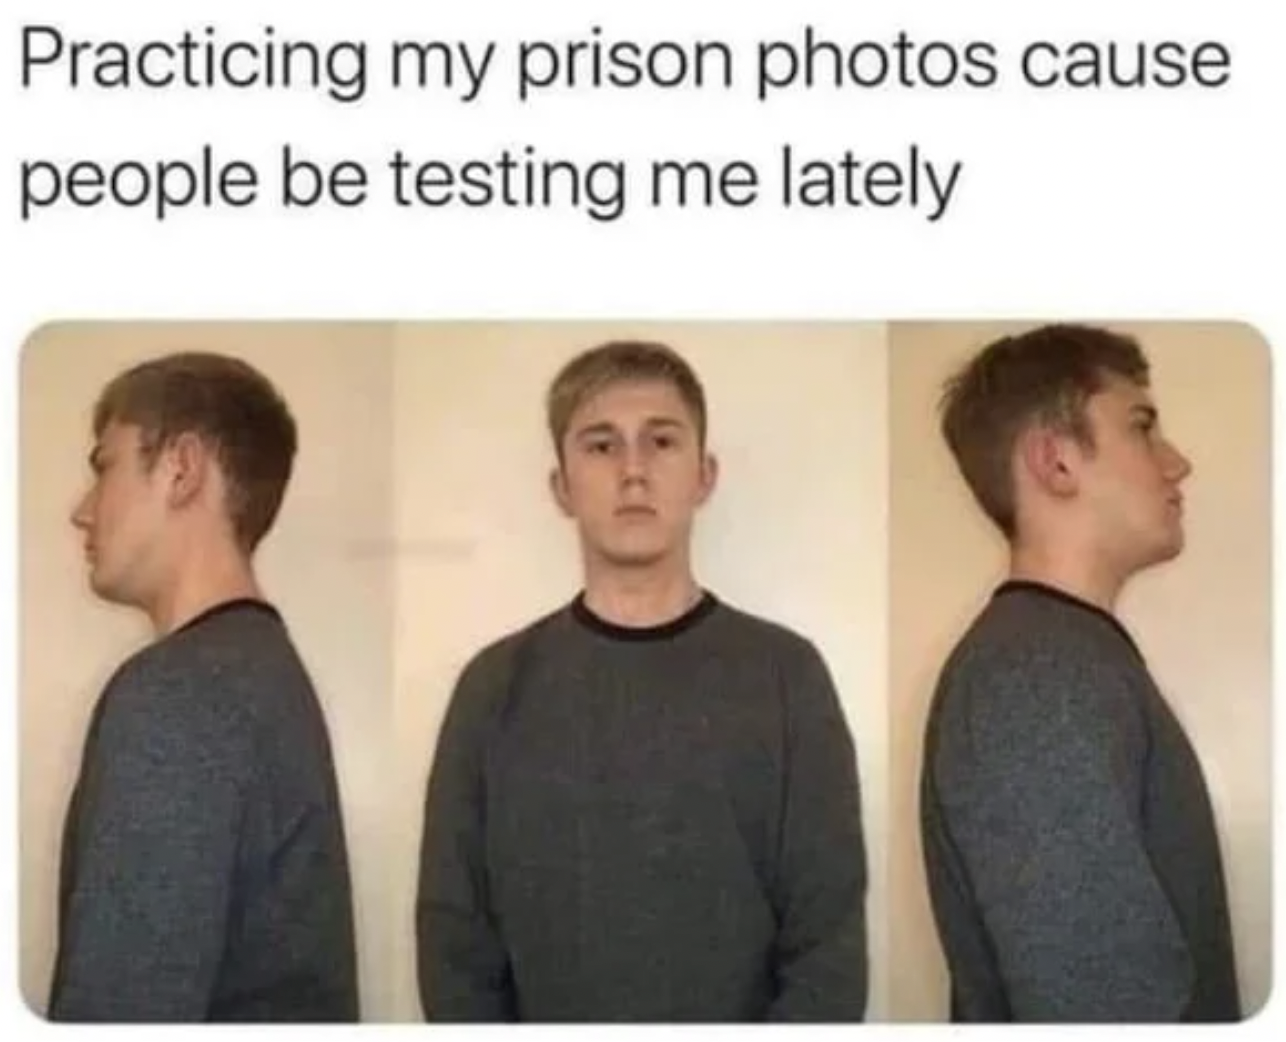 Internet tough guys - practicing prison photos meme - Practicing my prison photos cause people be testing me lately